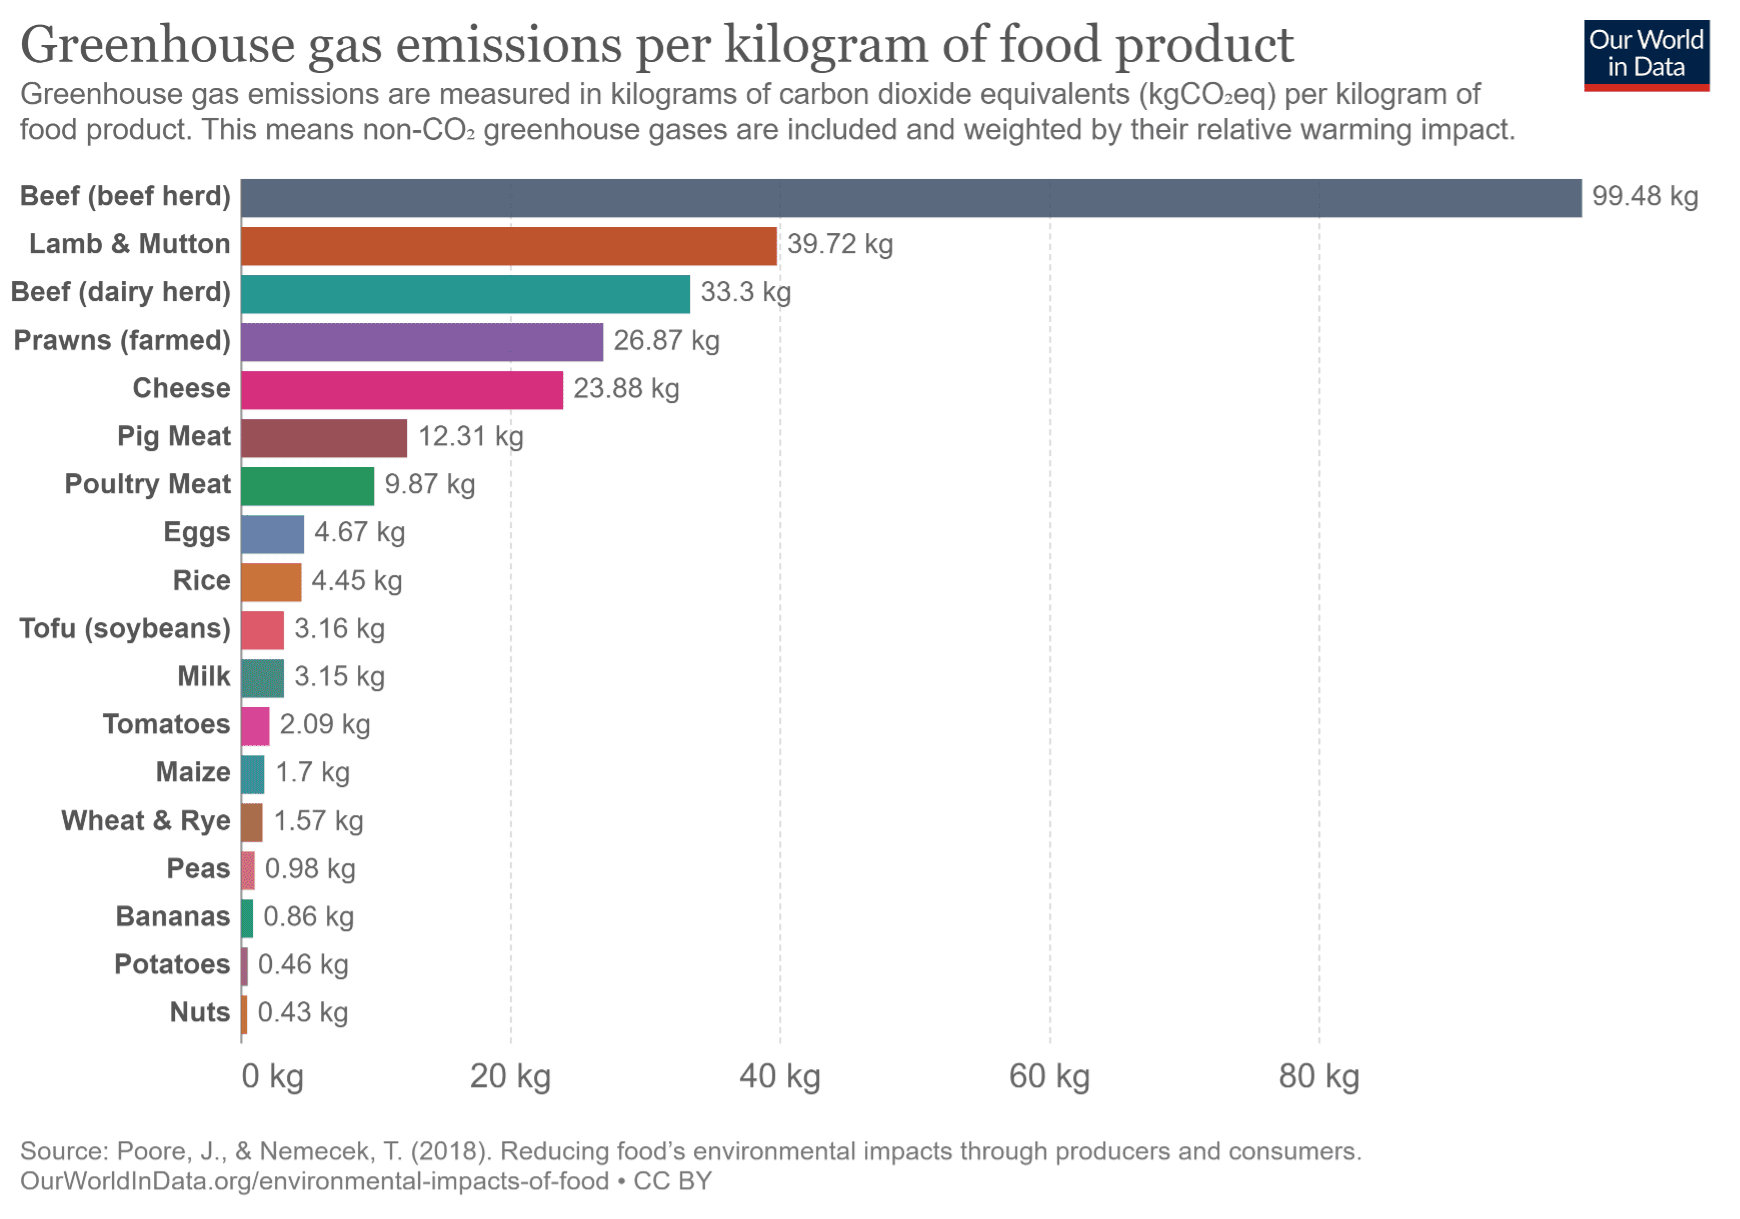 Greenhouse gas emissions per kilogram of food product